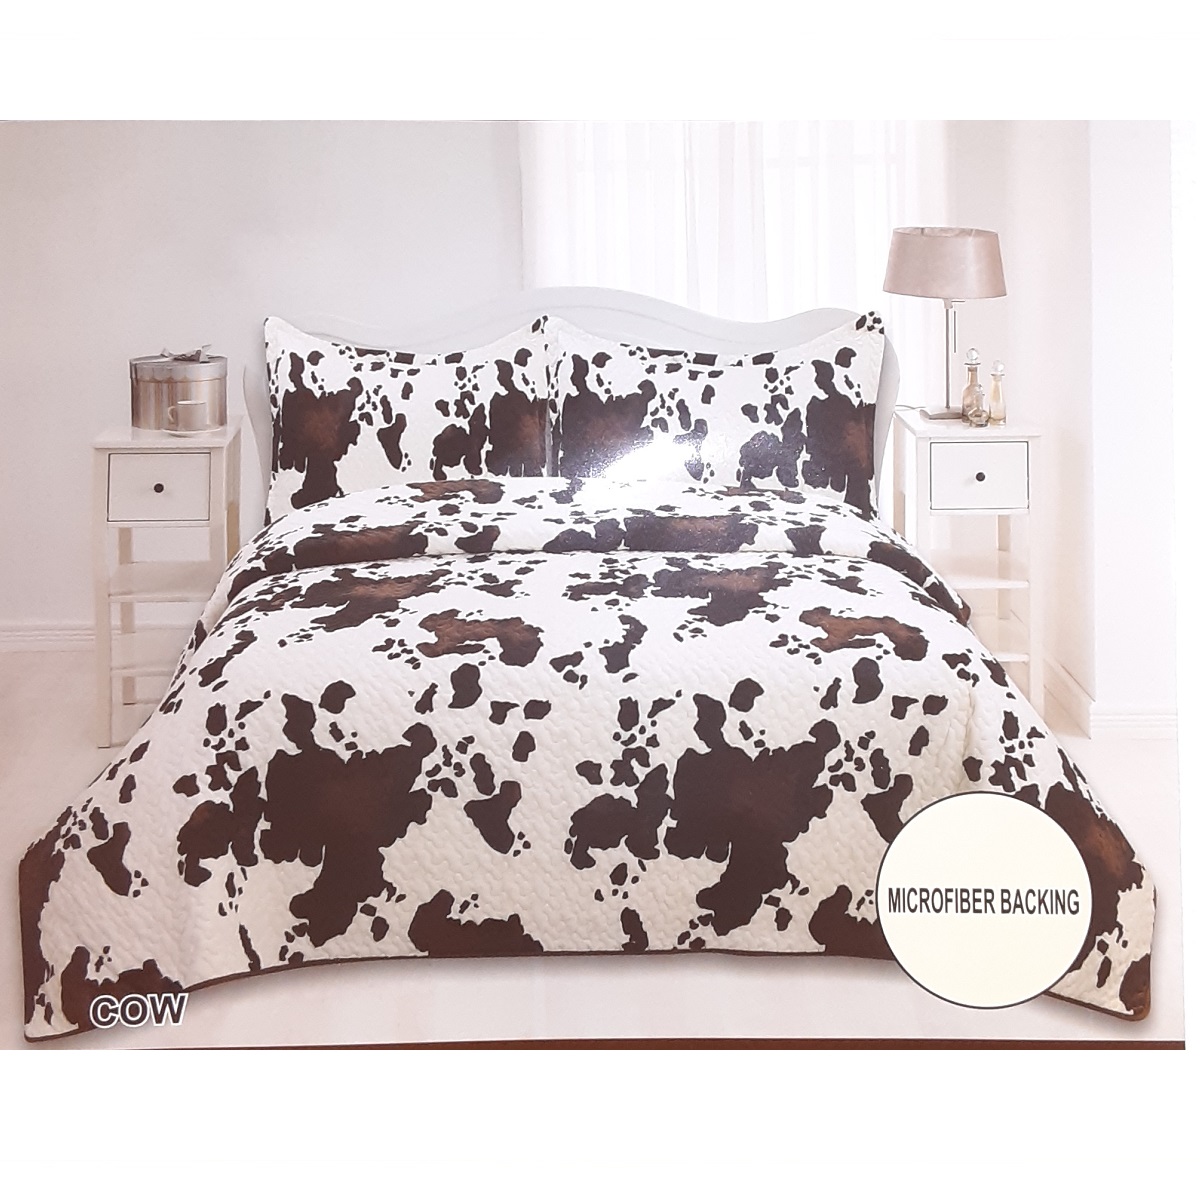 Western Design 3 Piece Quilted Bedspread Set, Cow Print Design